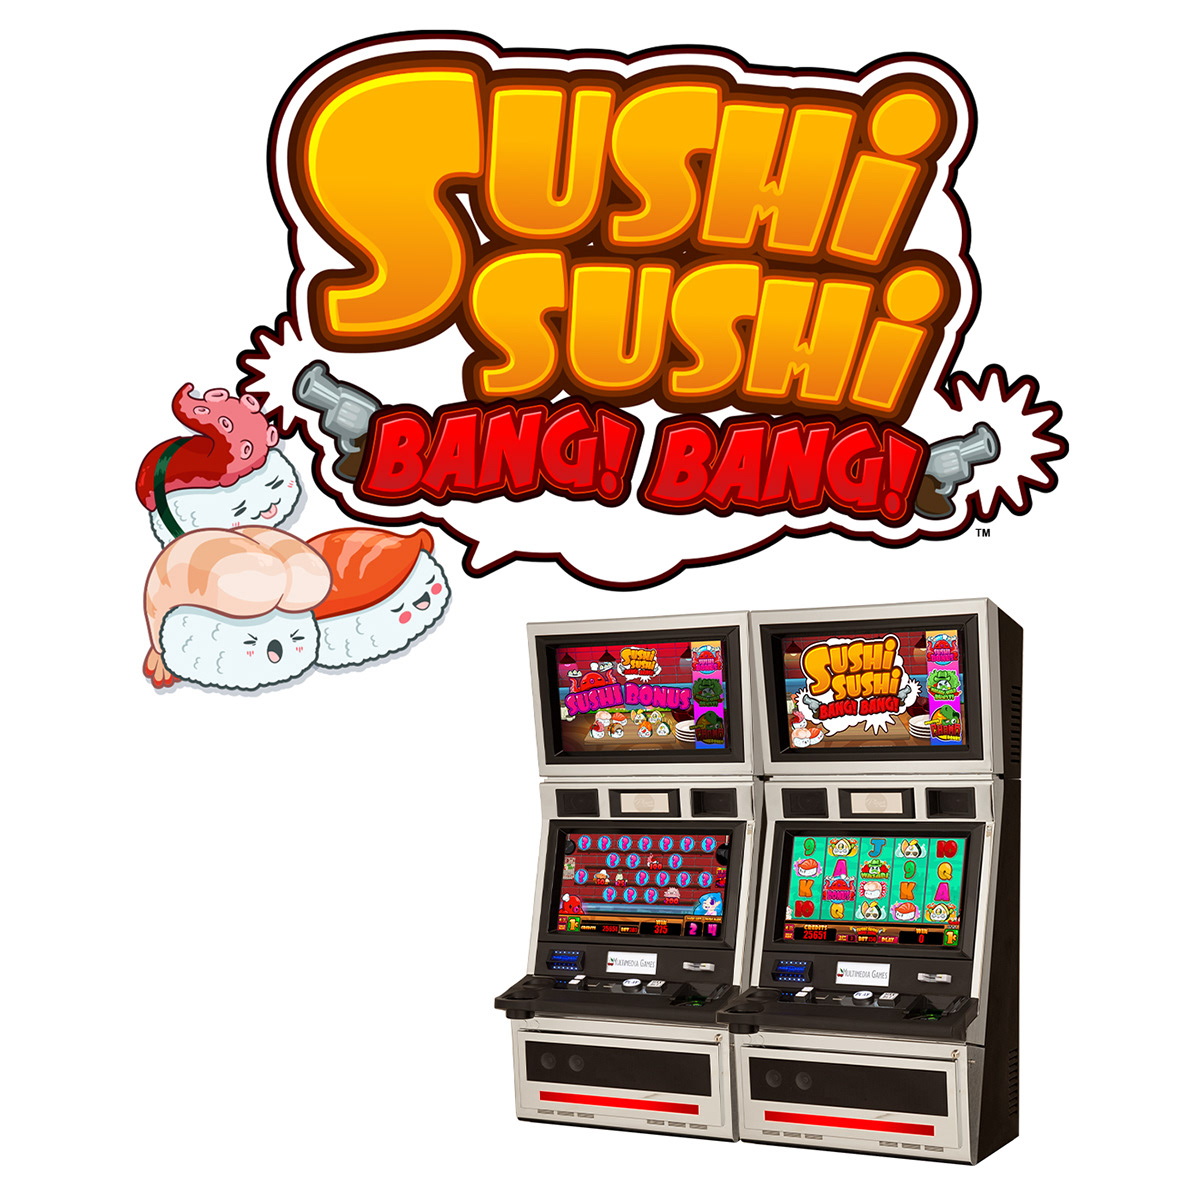 animatio cartoo cartoon character cut Game Desig slot machin sush vector ar